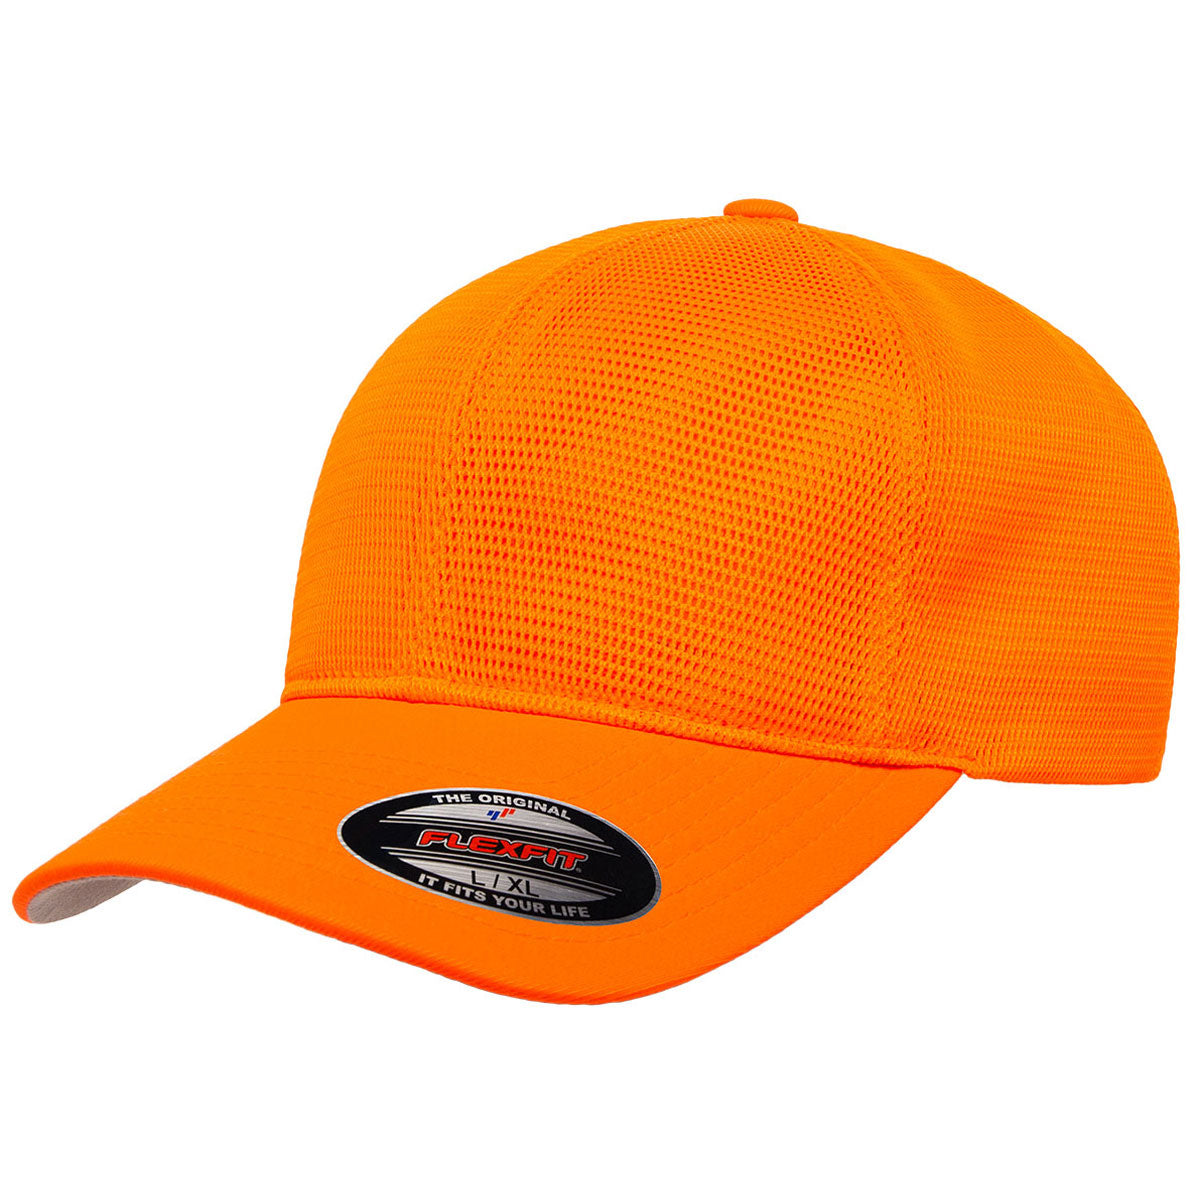 360 Neon Flexfit Omnimesh Orange Cap